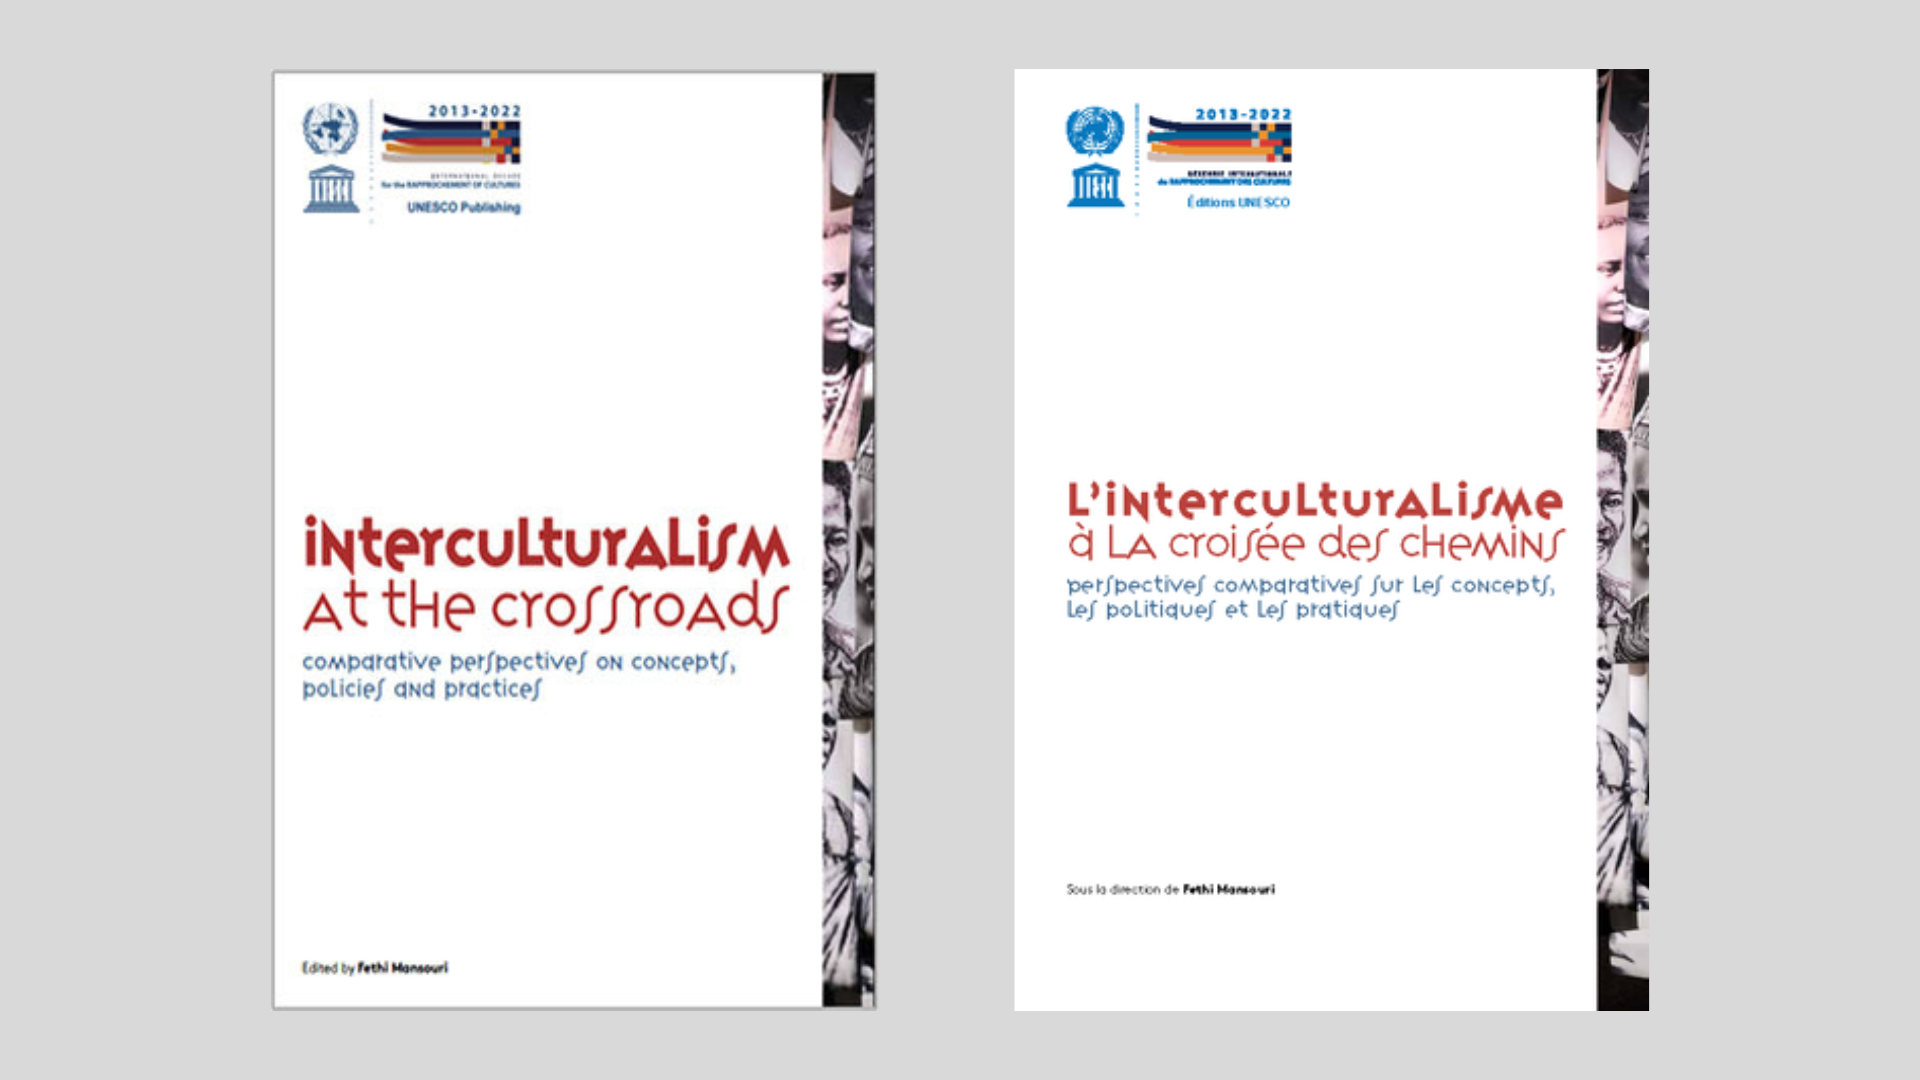 The book covers of Interculturalism at the Crossroads and L'interculturalisme a la croisee des chemins